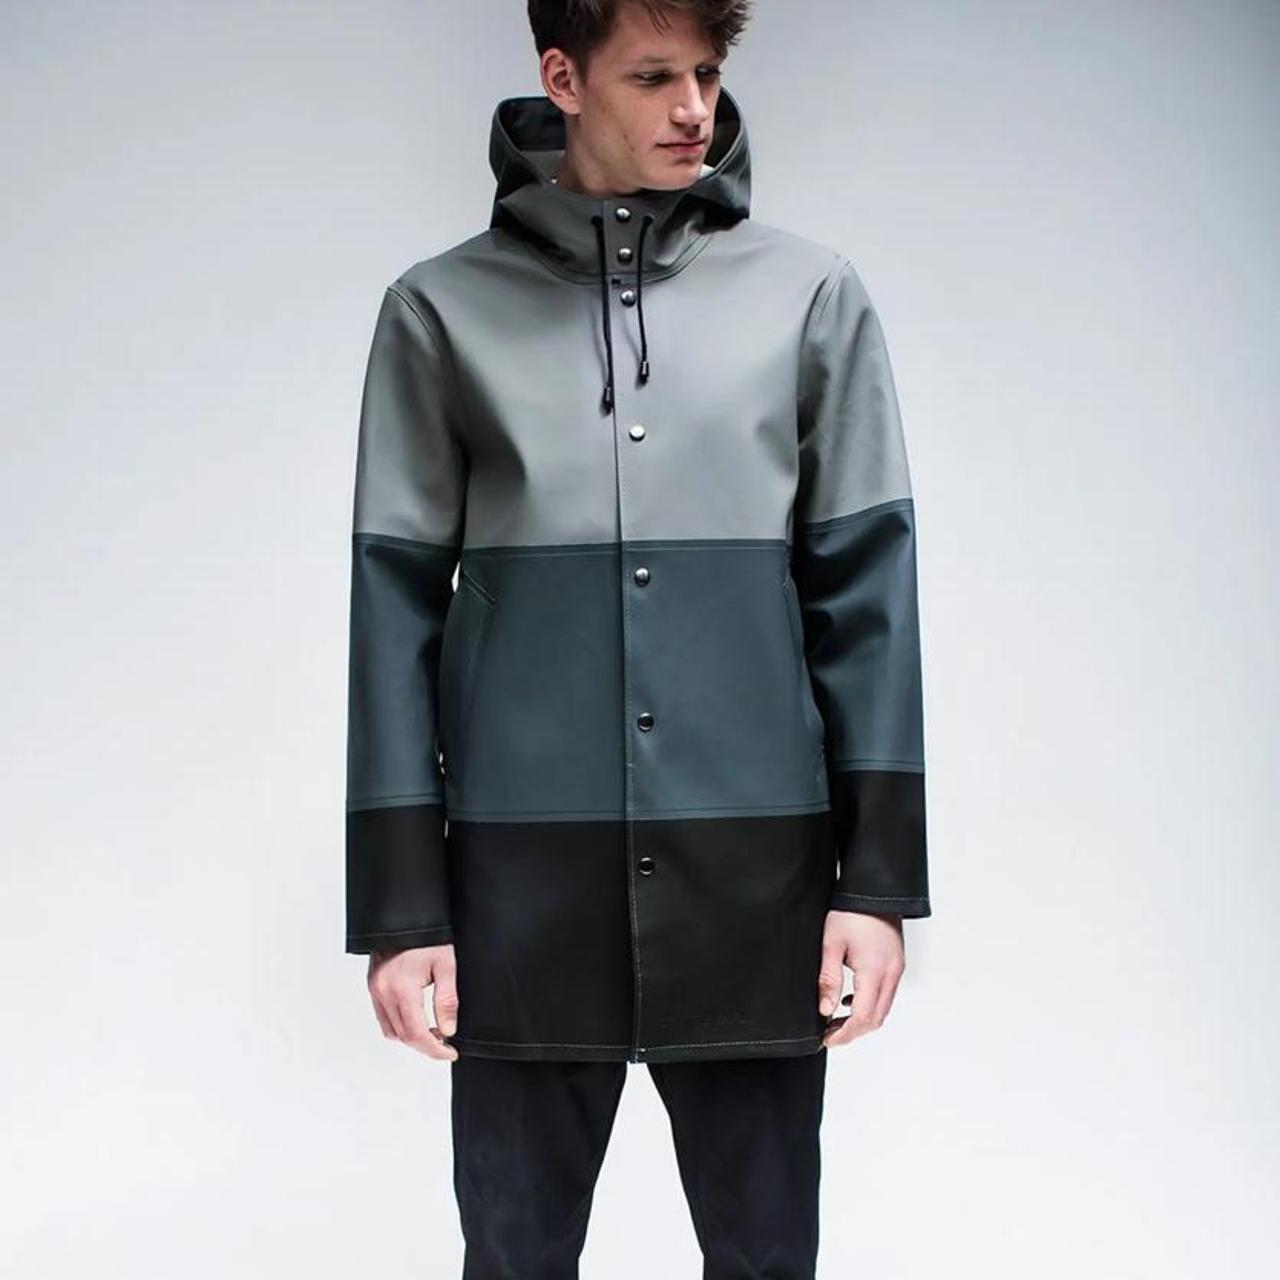 Product Image 1 - Stutterheim Grey Striped Raincoat

Beautiful raincoat